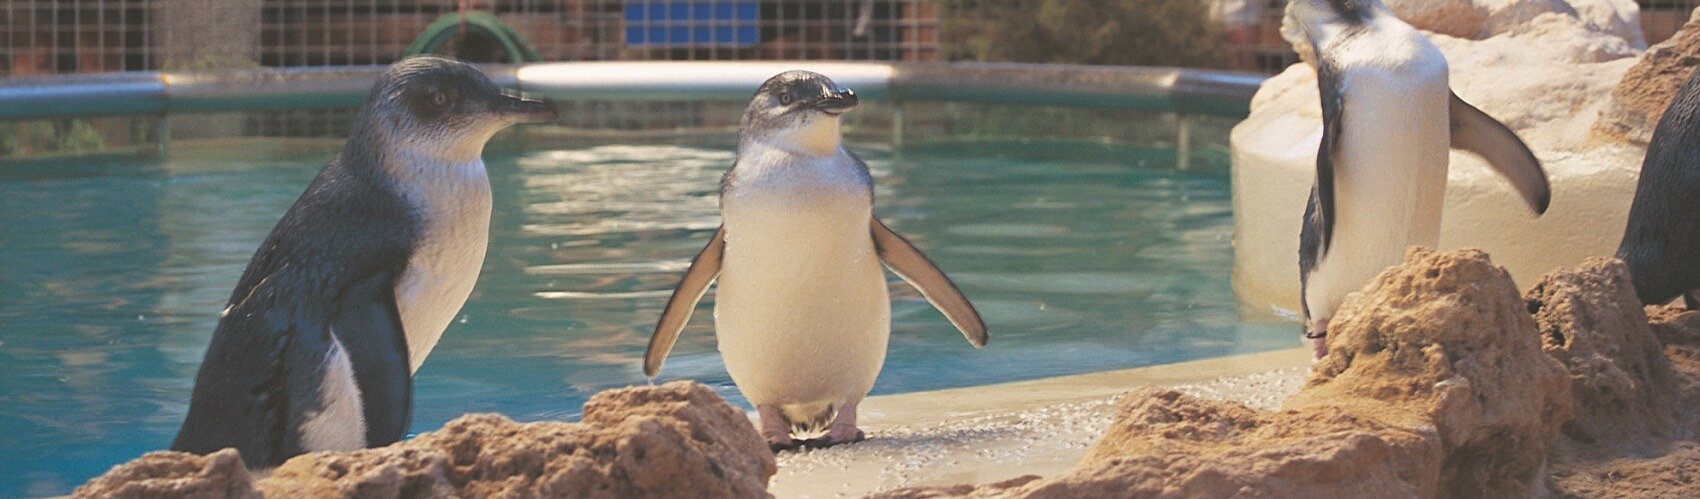 Penguin Island Tour from Perth with Caversham Wildlife Park